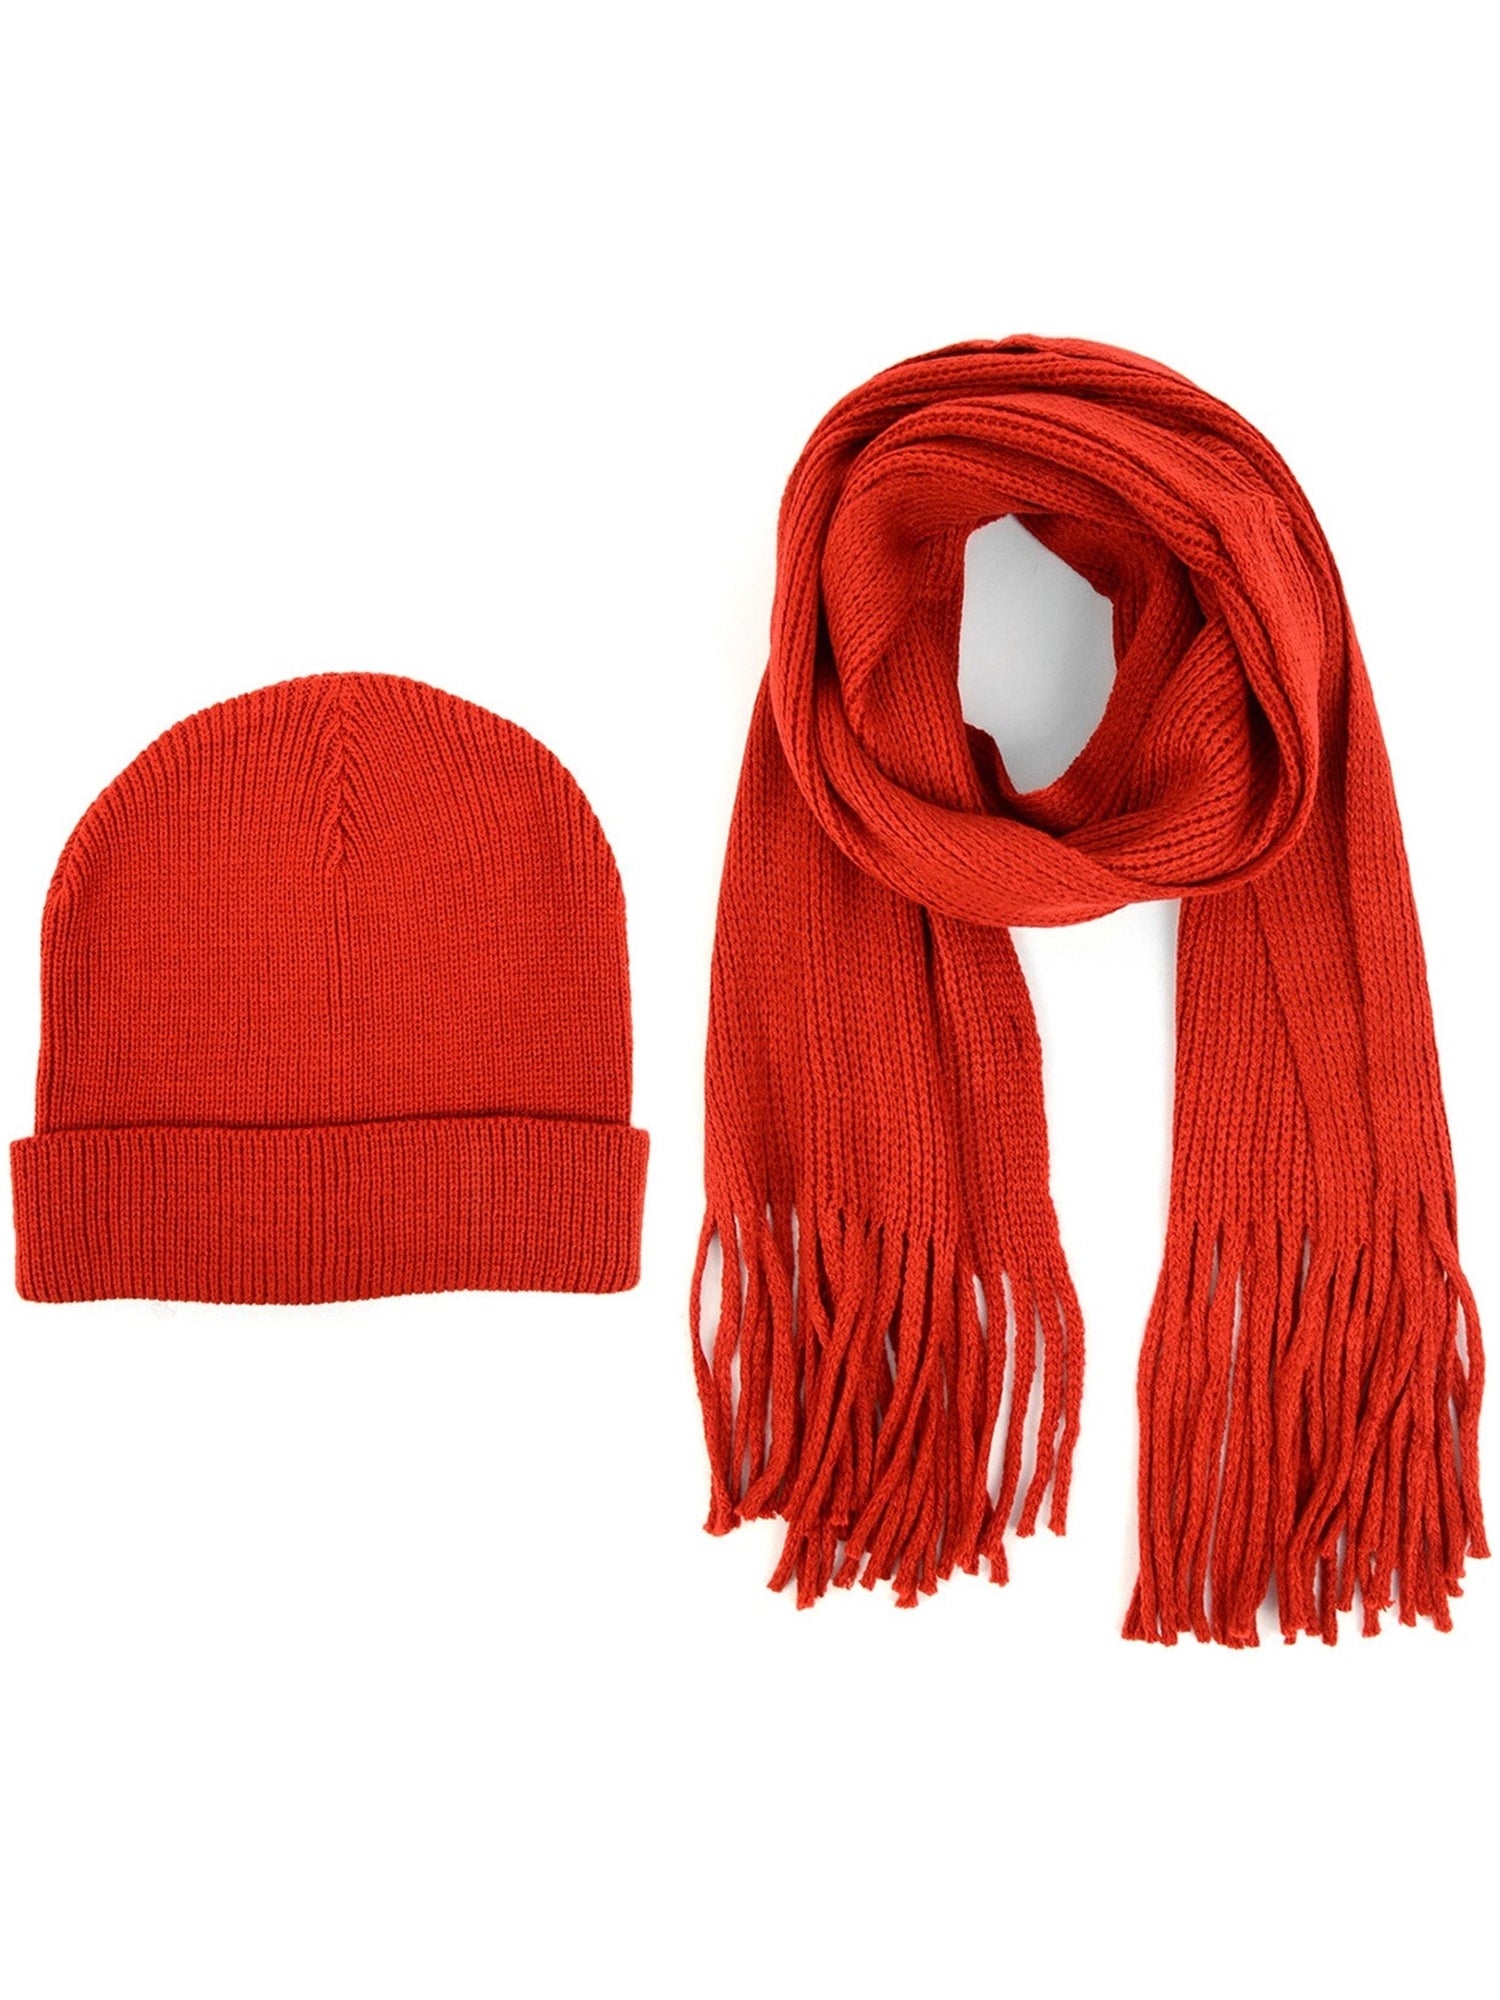 Men's Acrylic Knit Scarf and Hat Set Winter Set Umo Lorenzo Red One Size 